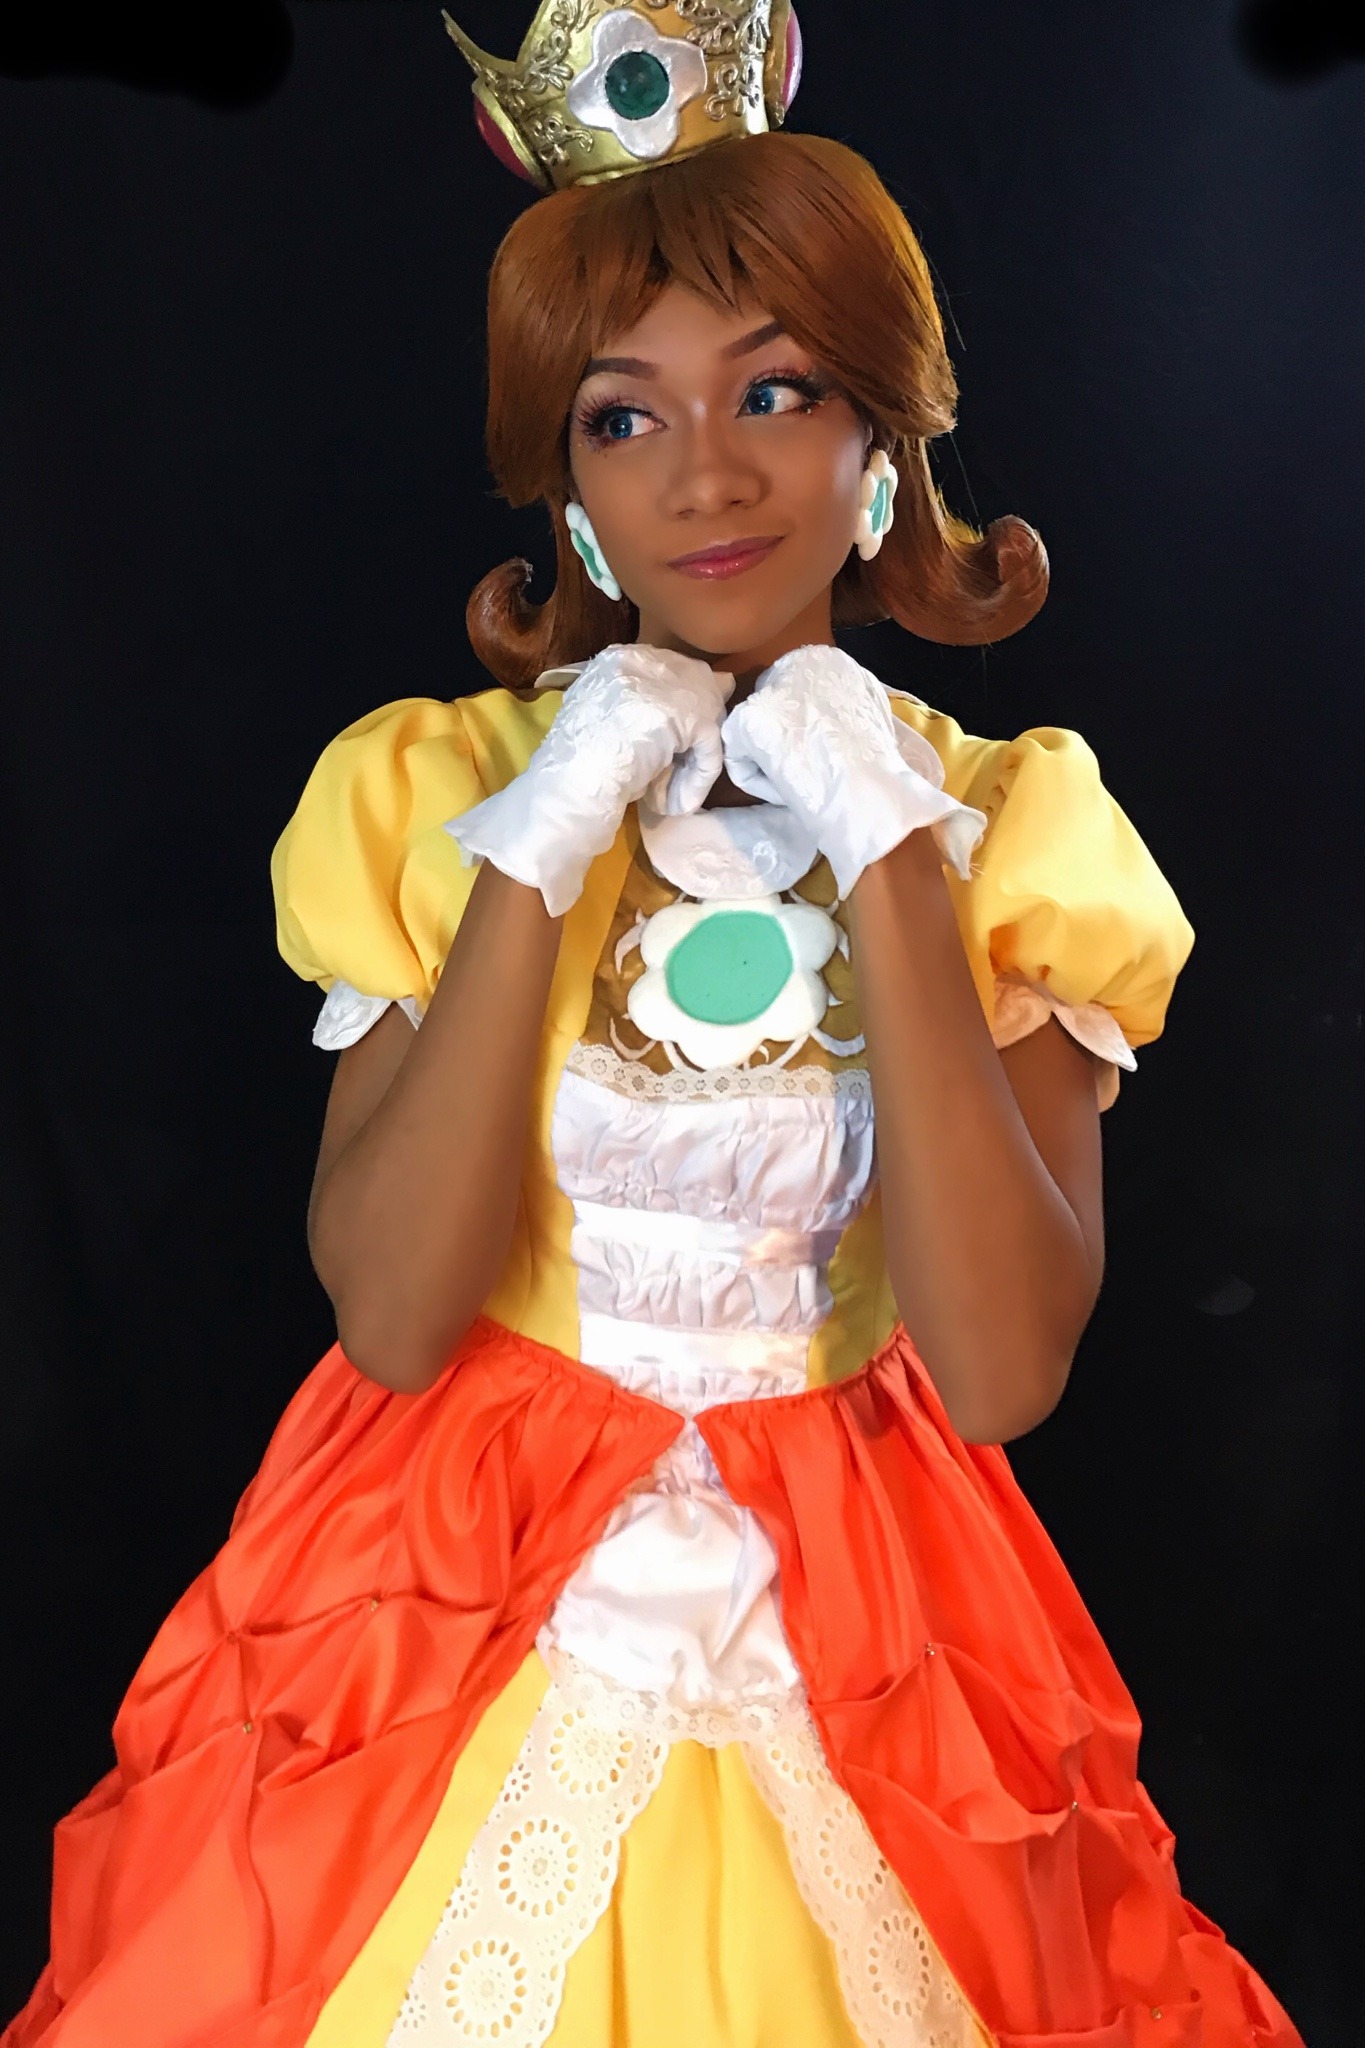 #princess-daisy-cosplay on Tumblr